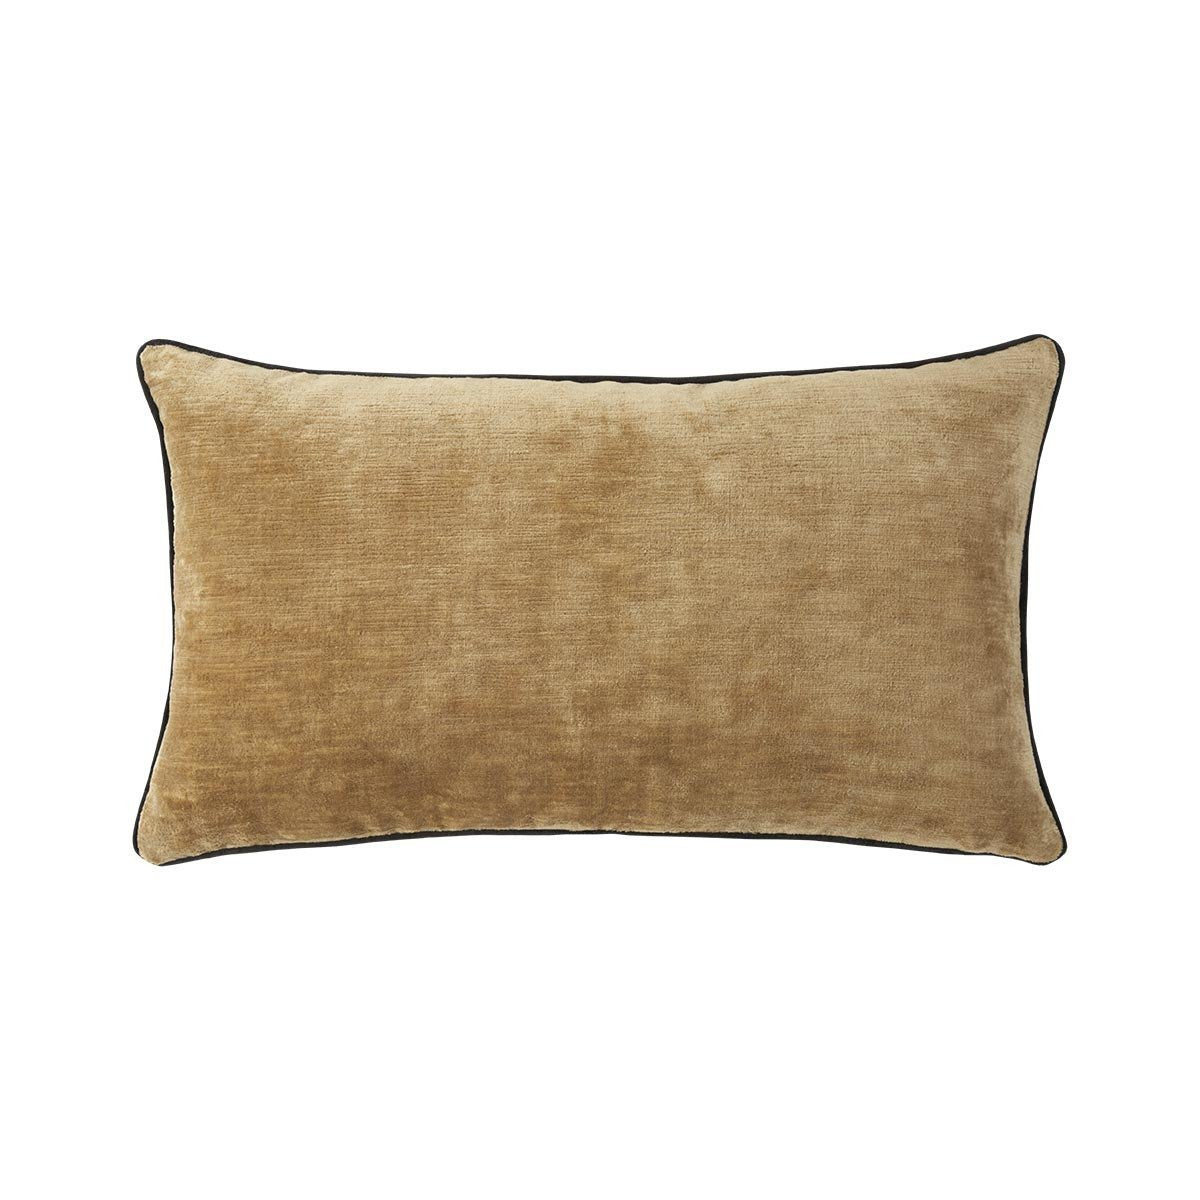 Boromee Daim Lumbar Pillow by Iosis | Fig Linens and Home